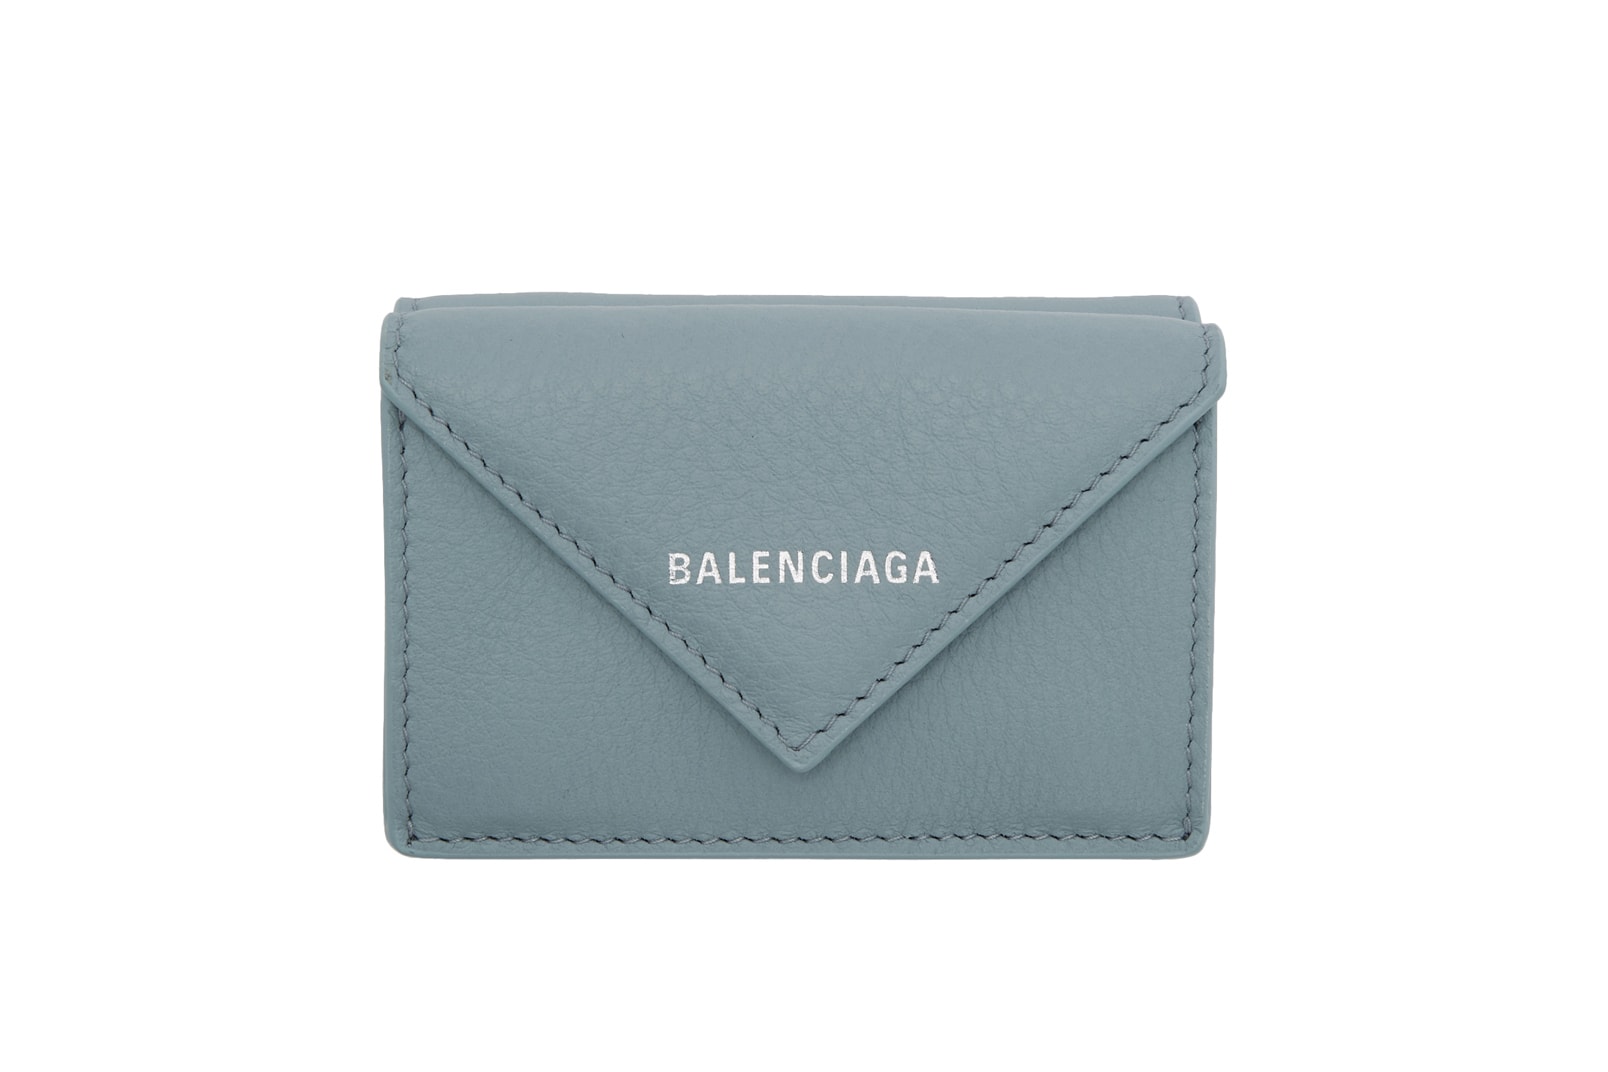 Balenciaga Logo Tote Bag Wallet Accessories Key Holder